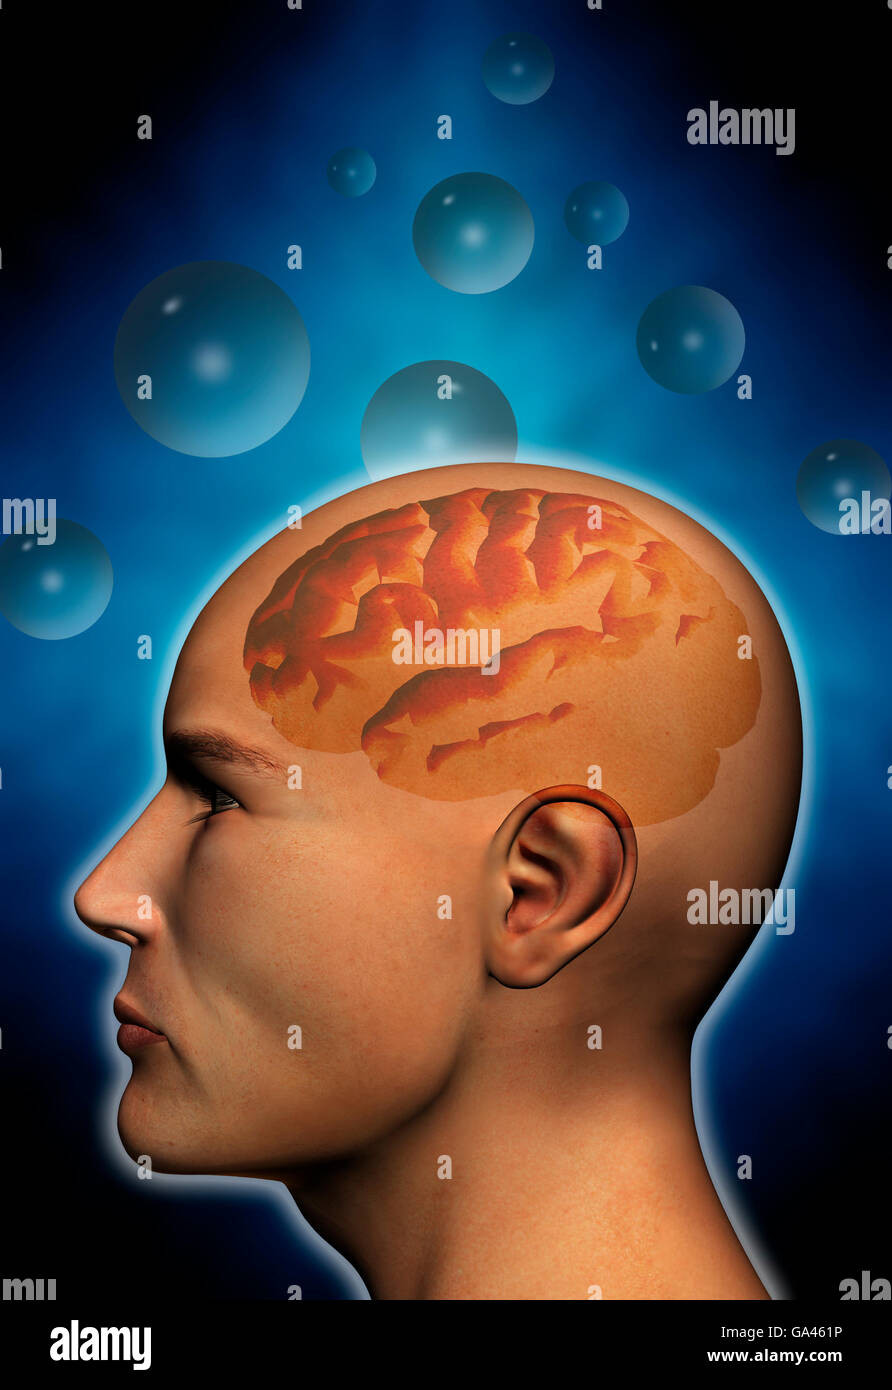 human brain concept Stock Photo